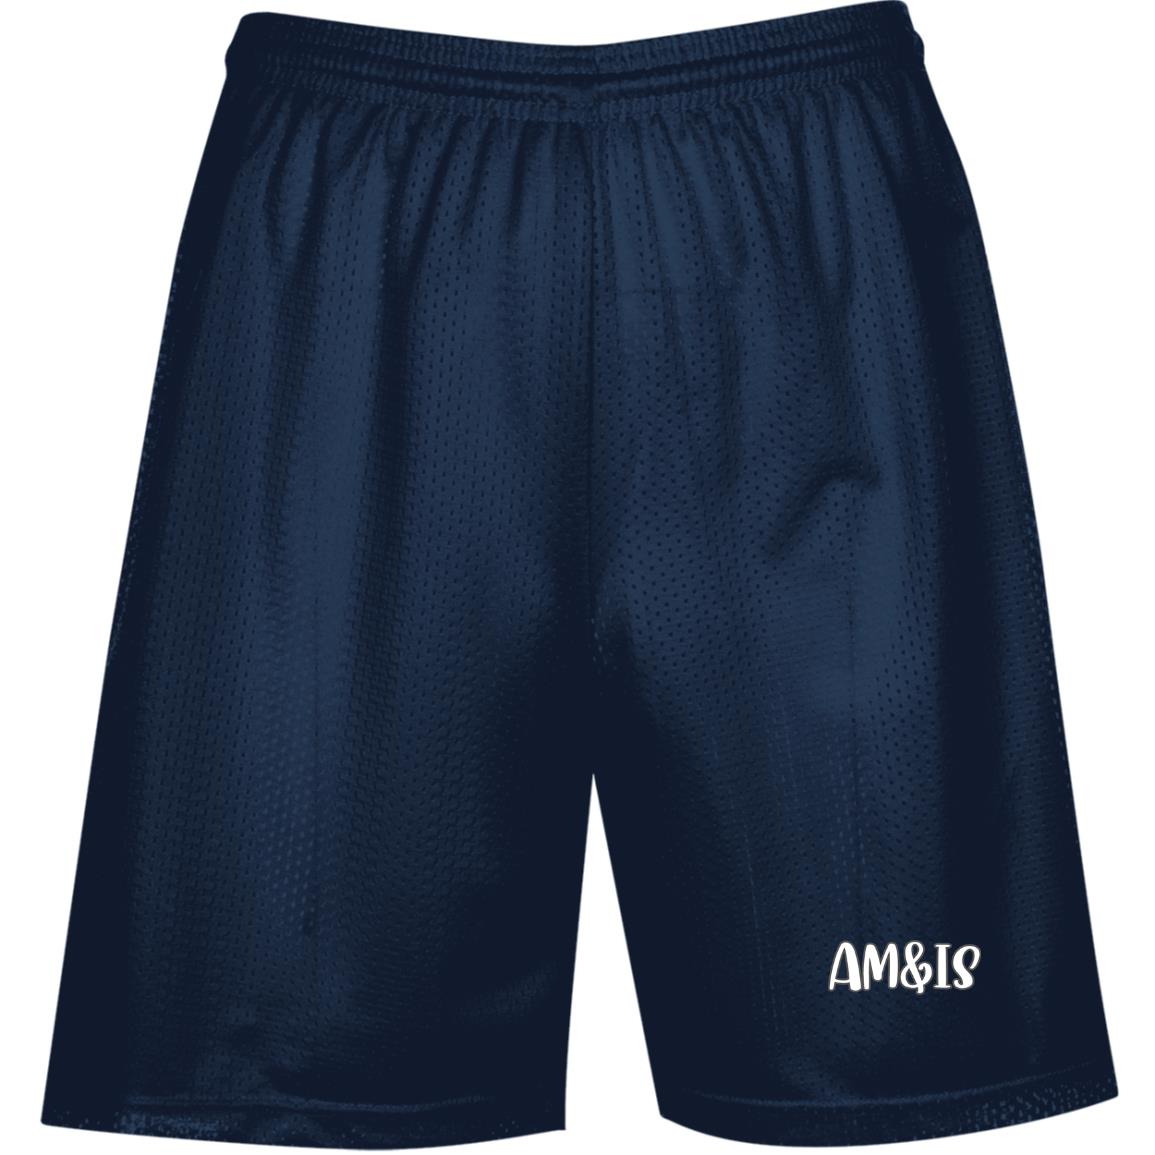 TRUE NAVY - Am&IS Activewear Performance Mesh Shorts - mens shorts at TFC&H Co.